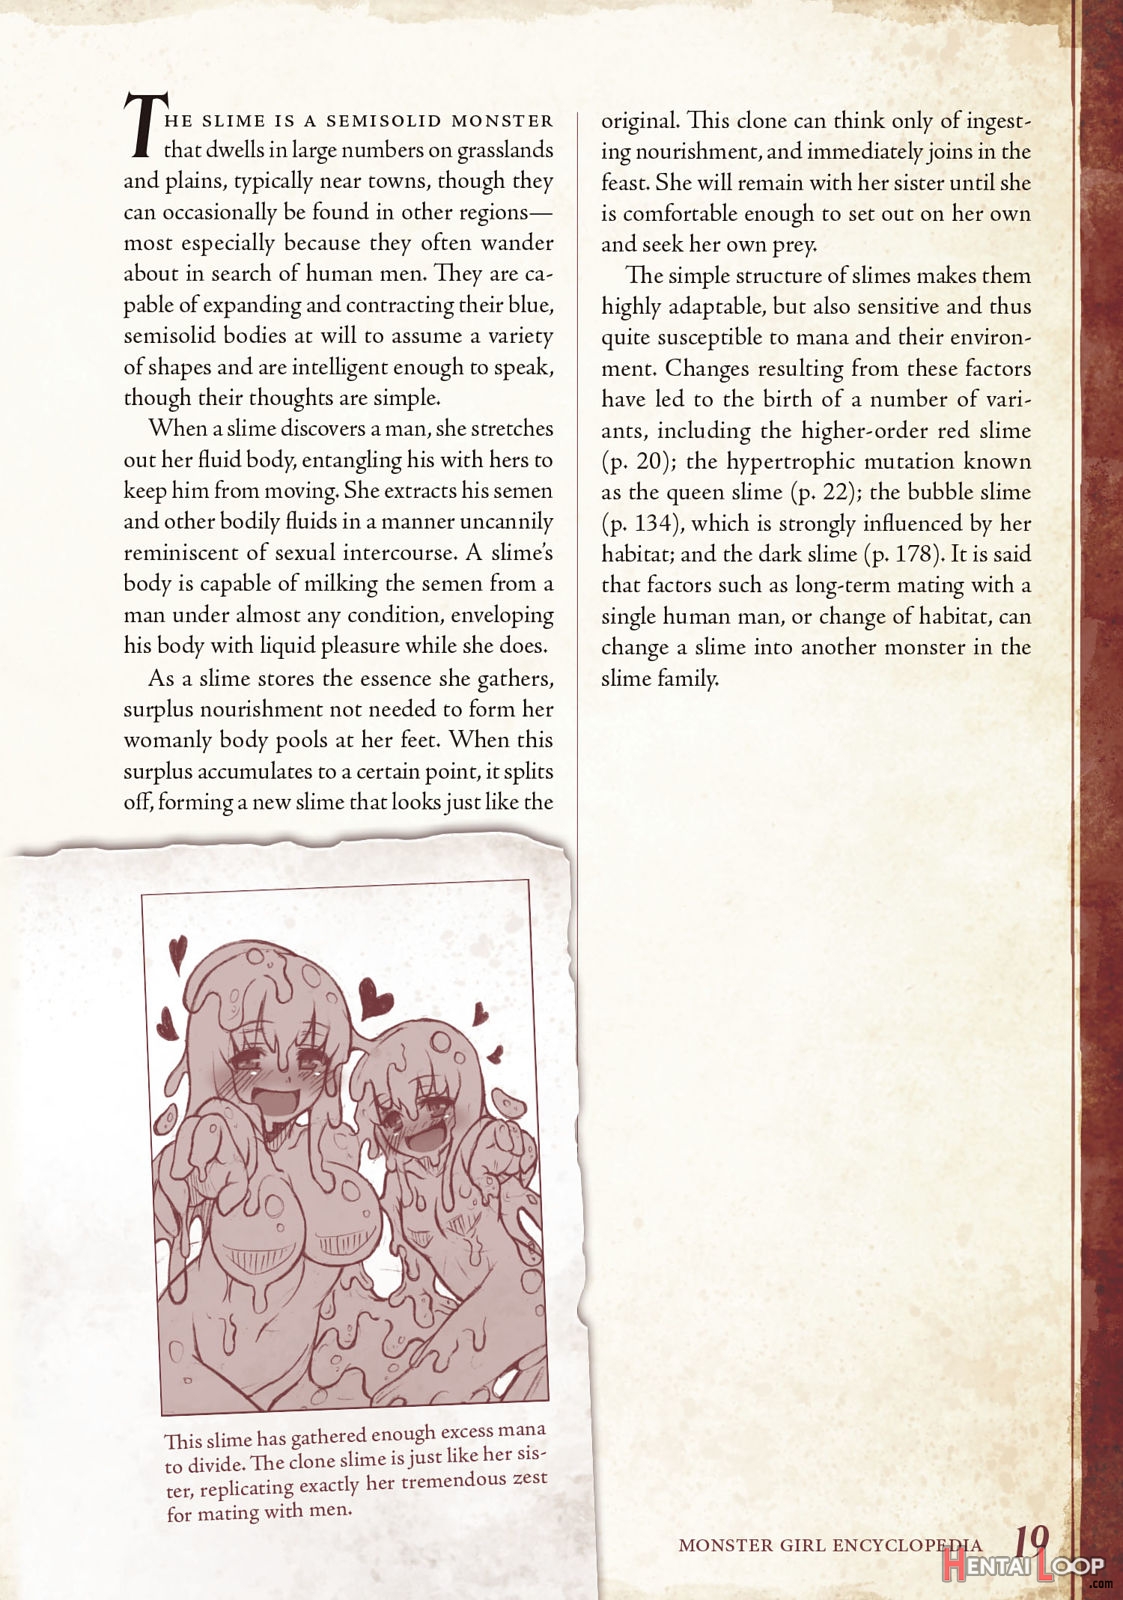 Monster Girl Encyclopedia Vol. 1 page 20